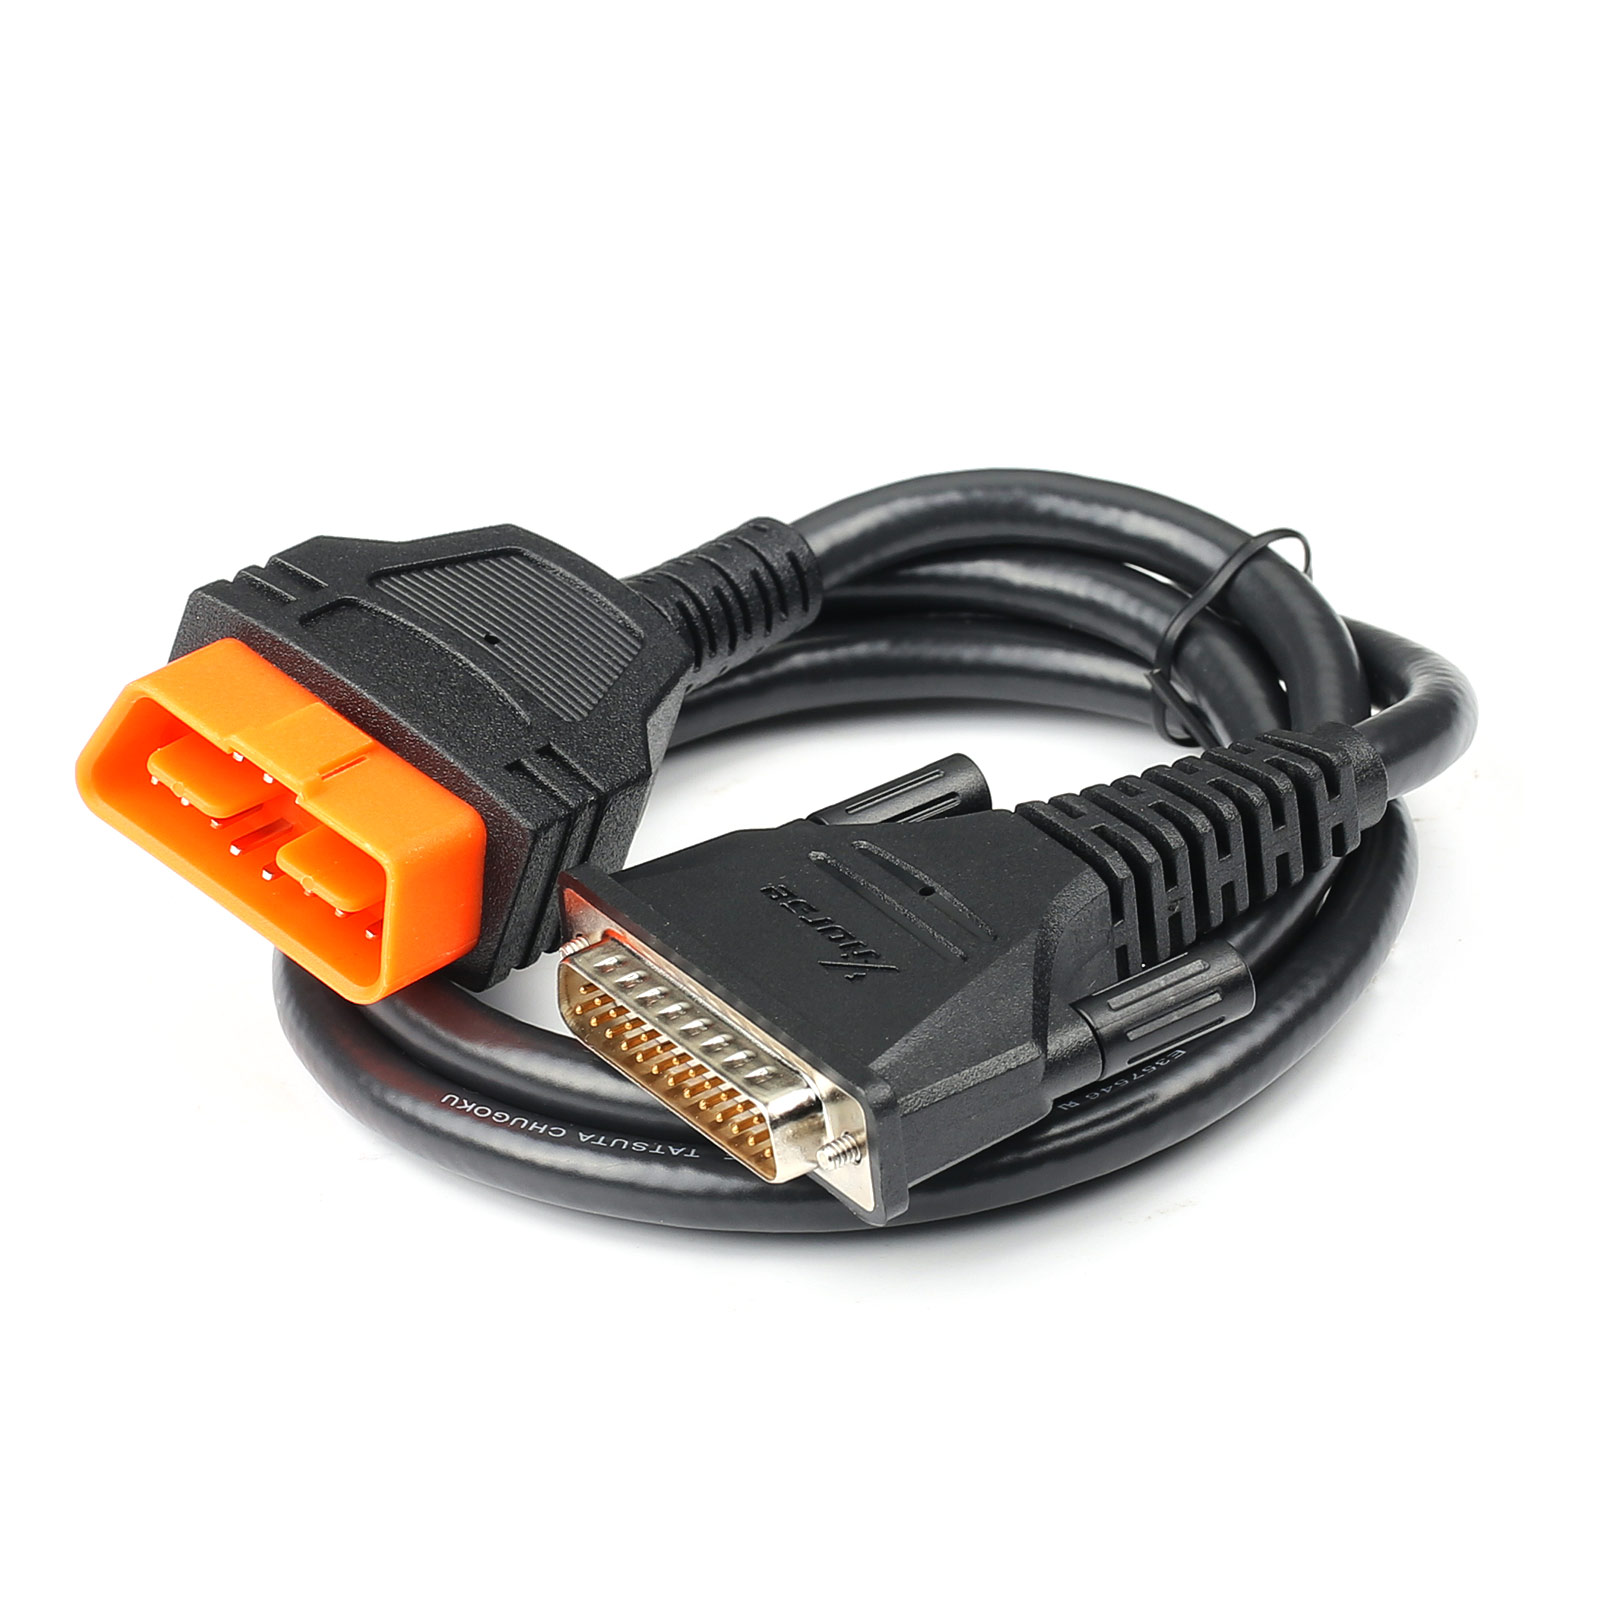 Xhorse vvvdi2 Main test Cable for vvdi 2 commander Keyboard Program